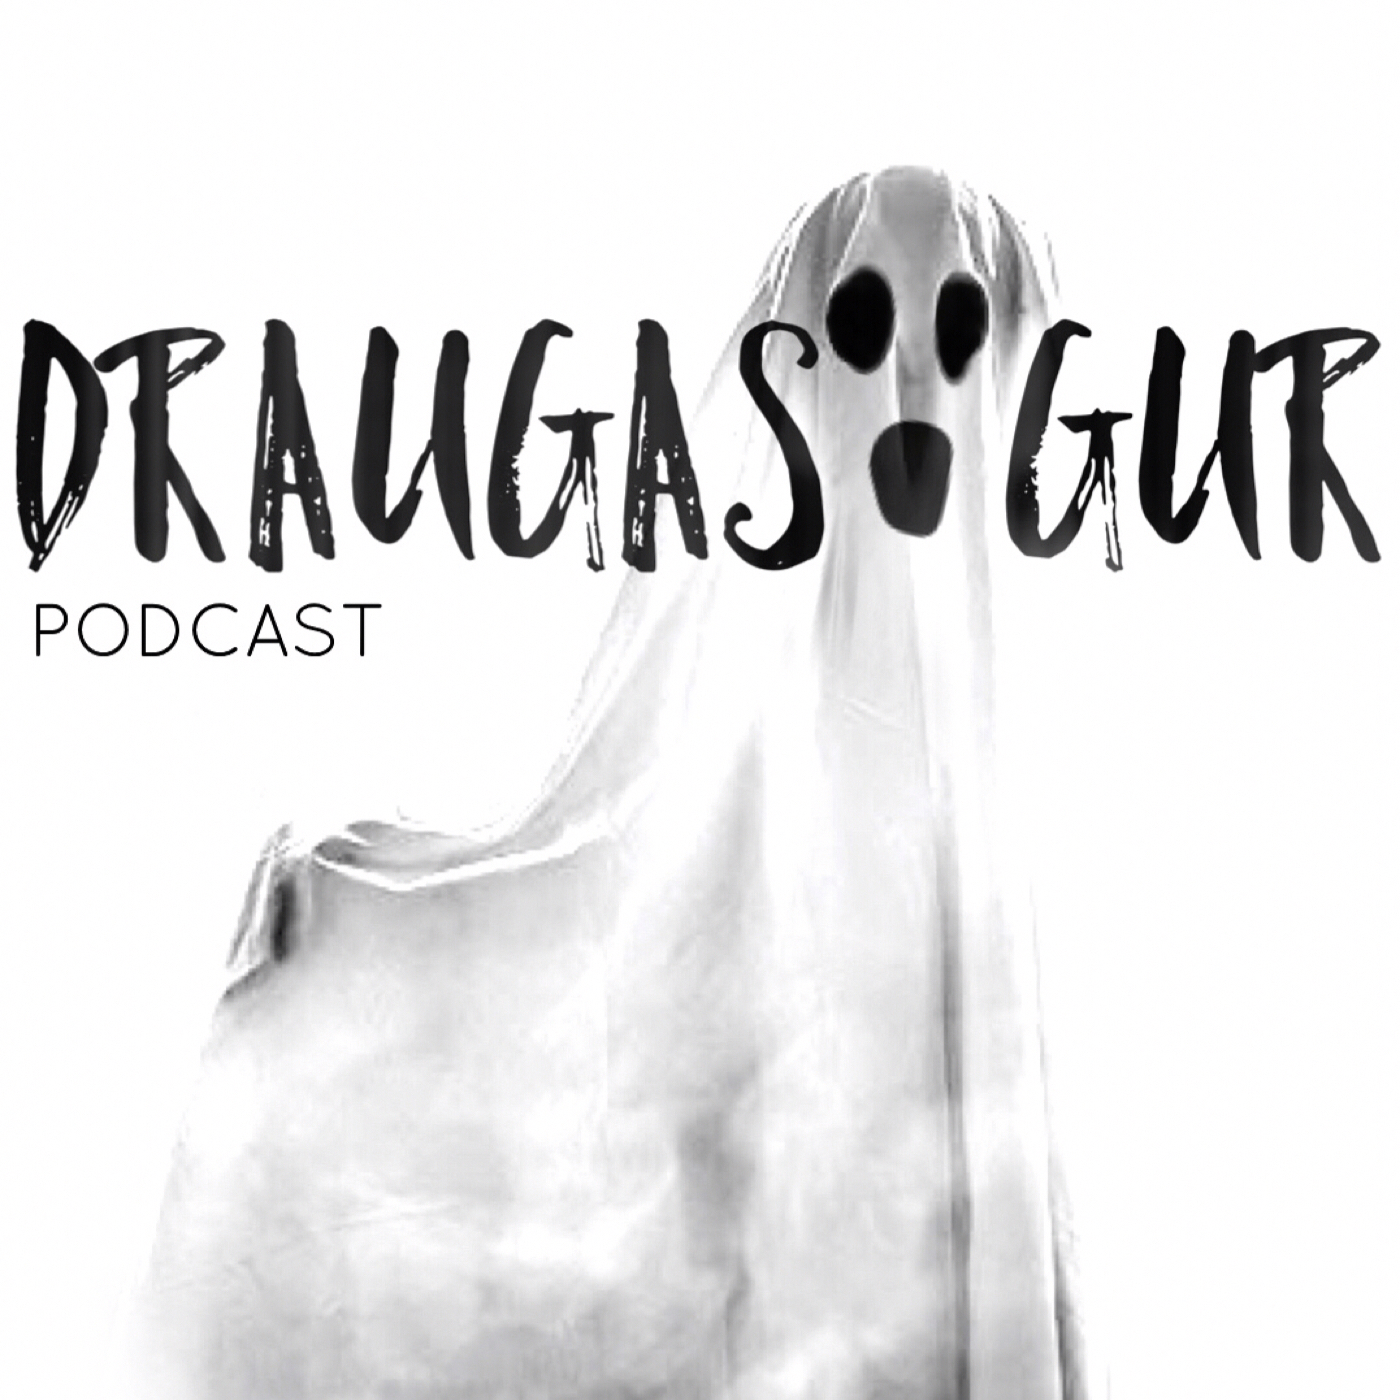 Artwork for podcast Draugasögur